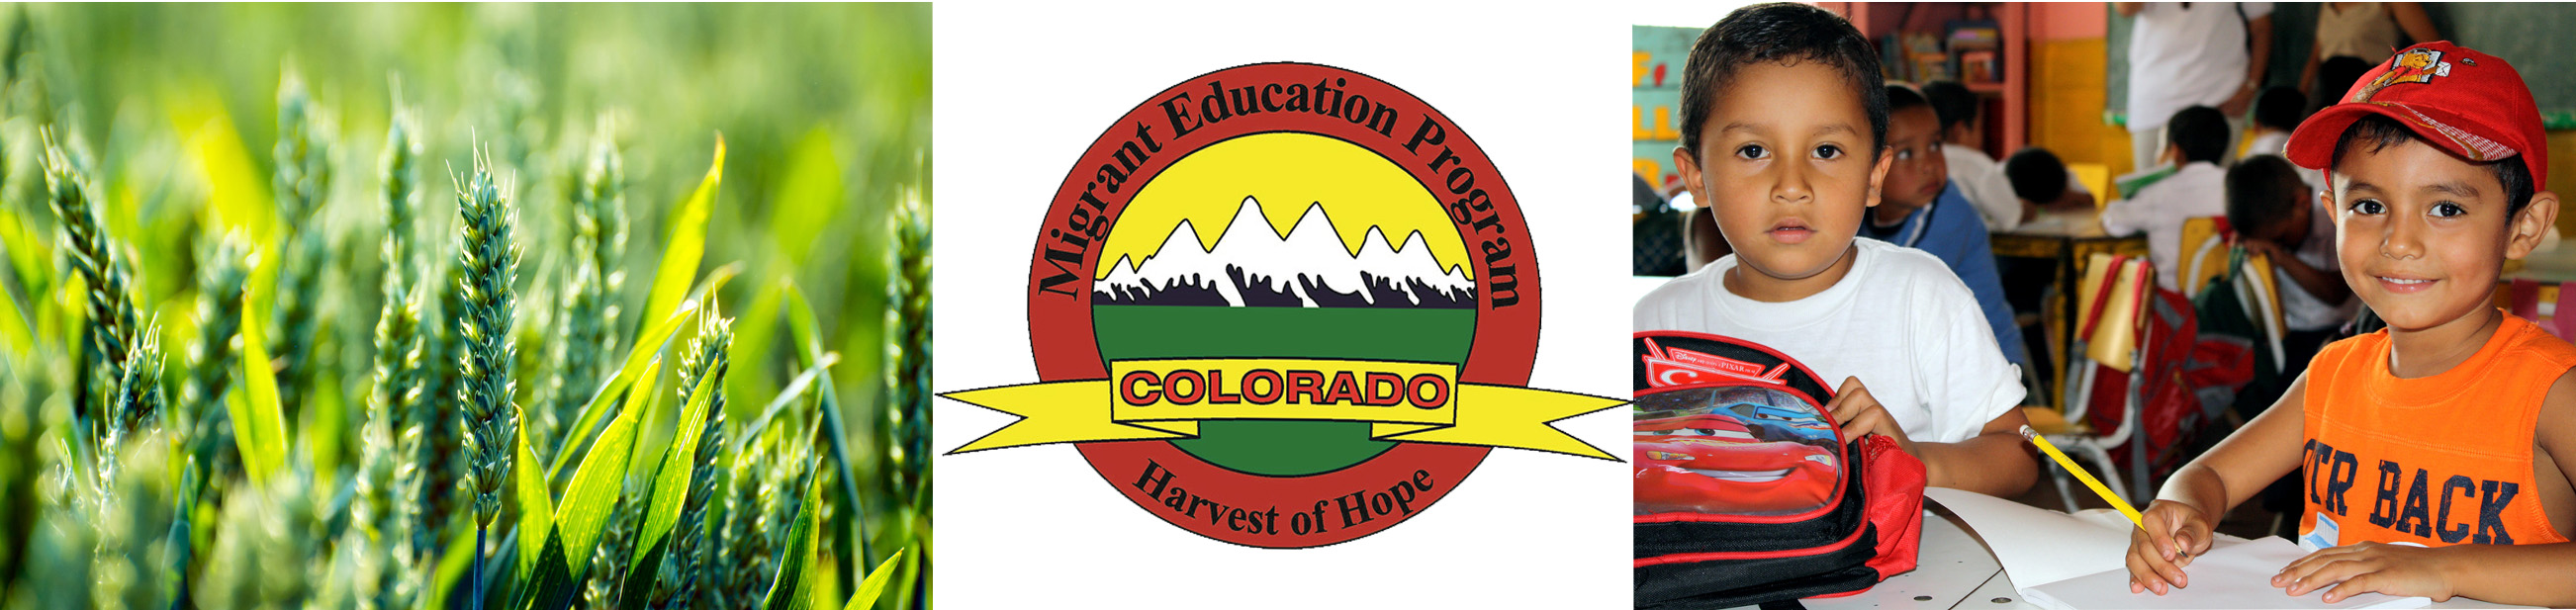 Migrant Education Program Colorado: harvest of hope